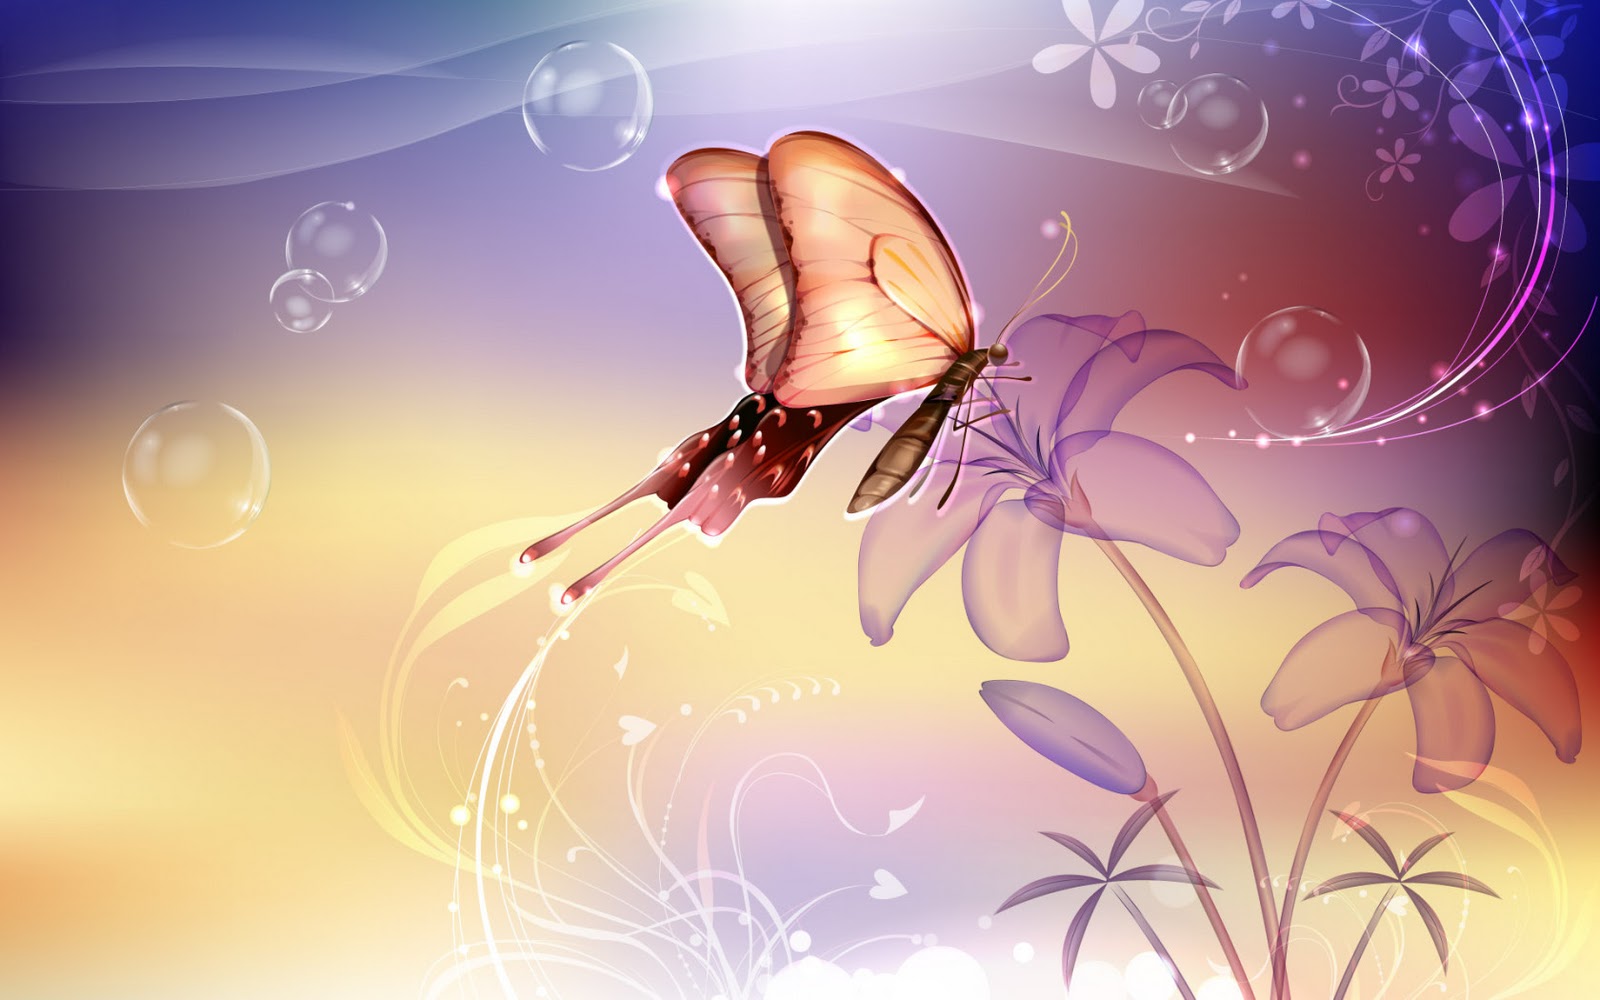 Wallpaper Image Screensavers Butterfly Fantasy